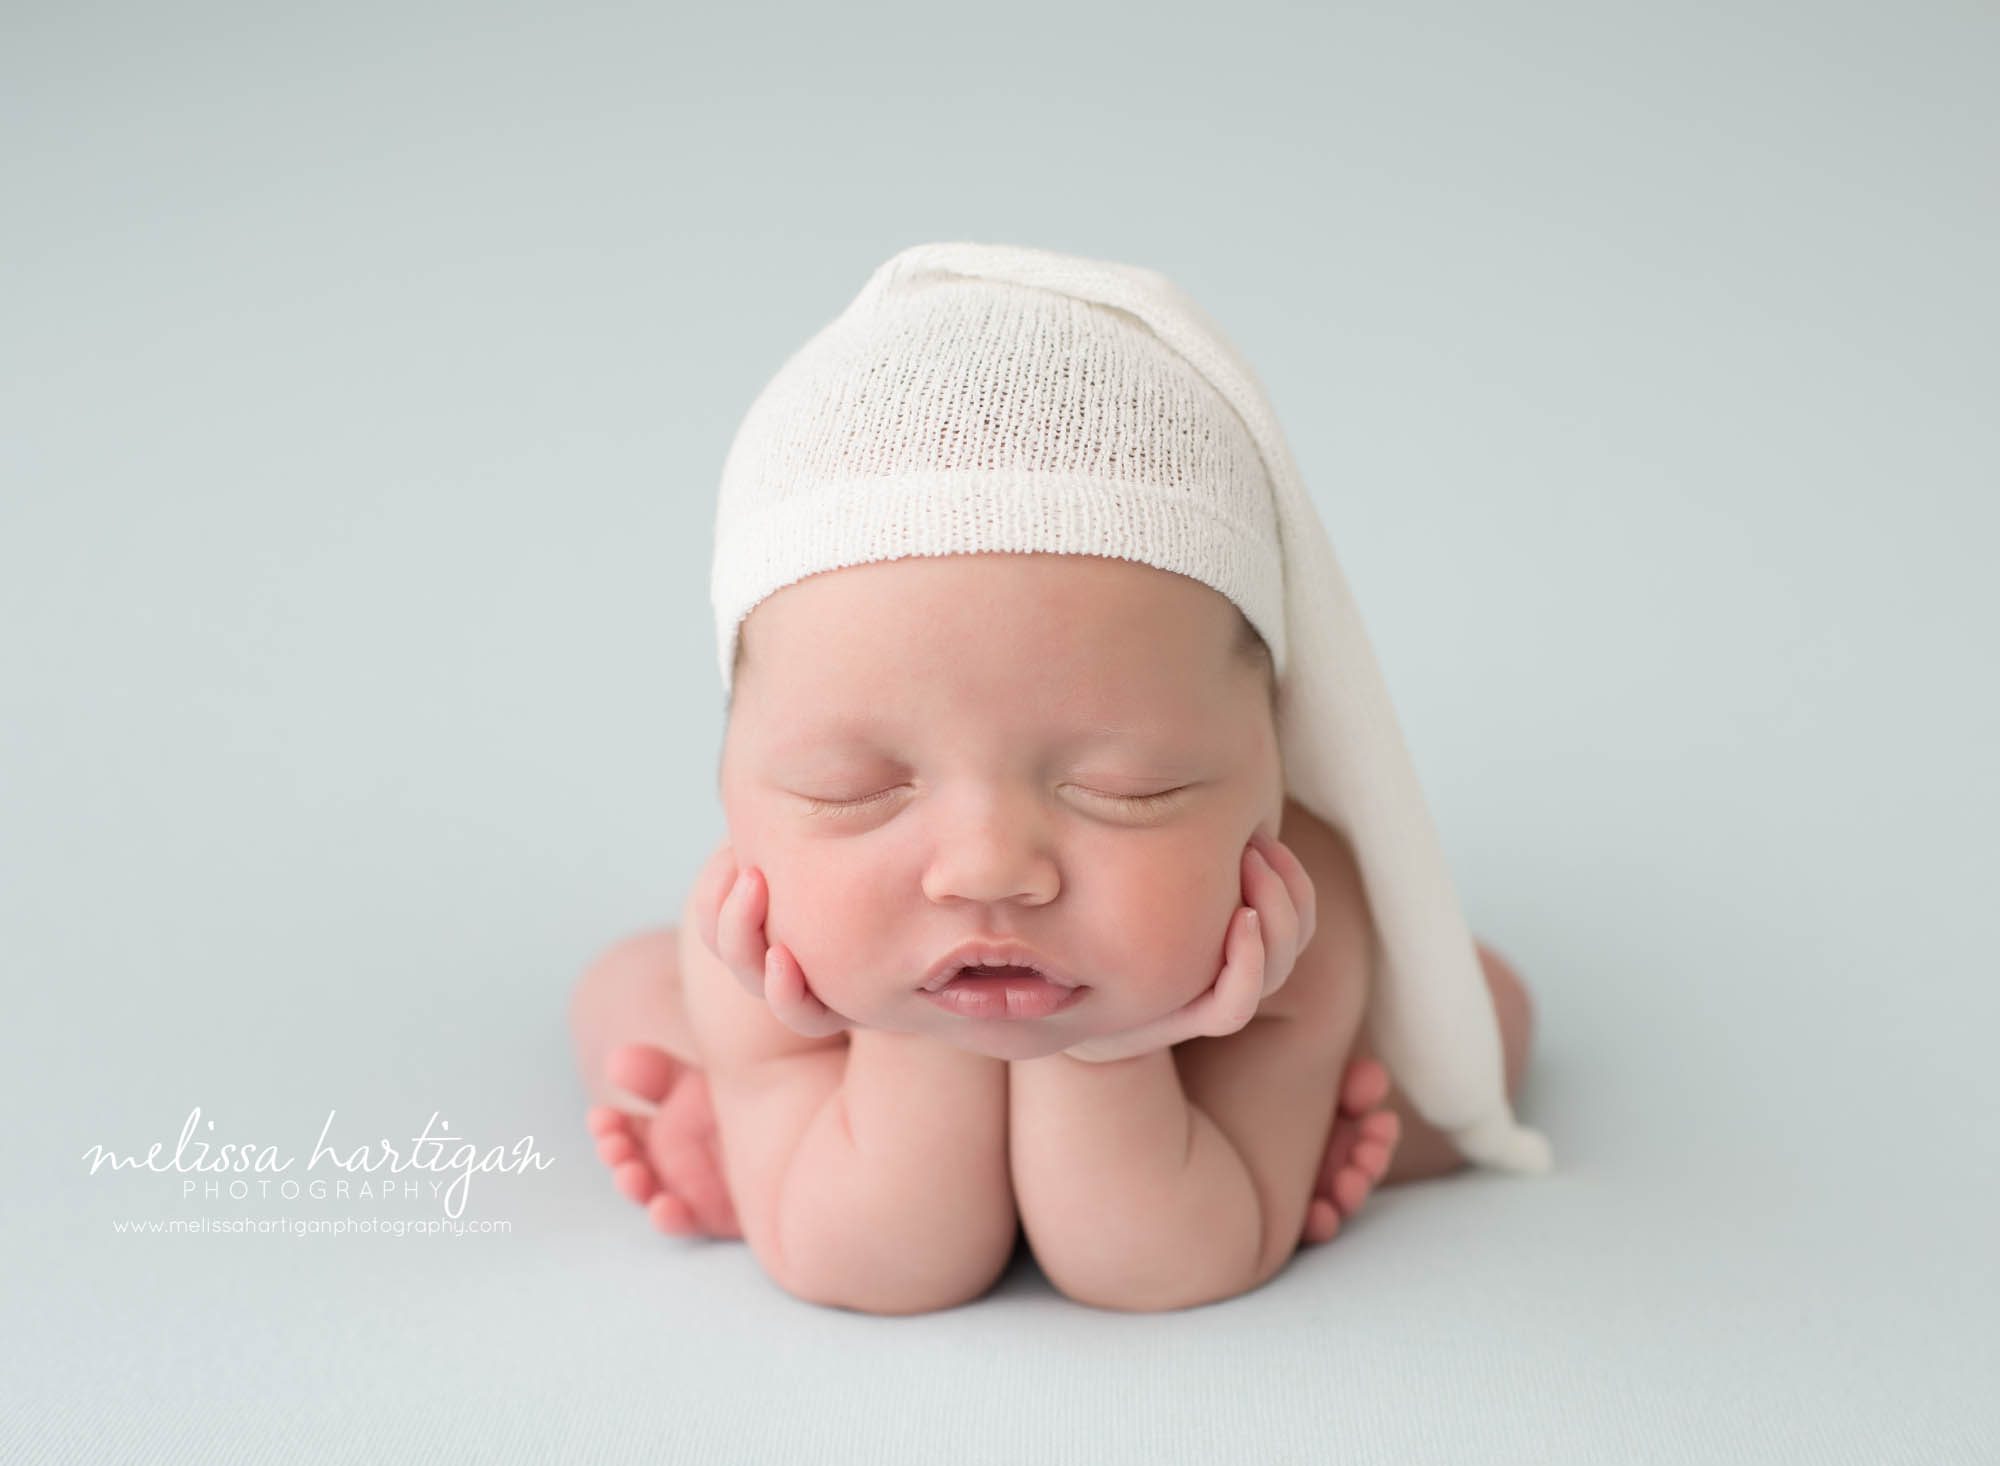 newborn baby boy posed froggy pose wearing cream sleepy cap newborn photographer tolland county CT